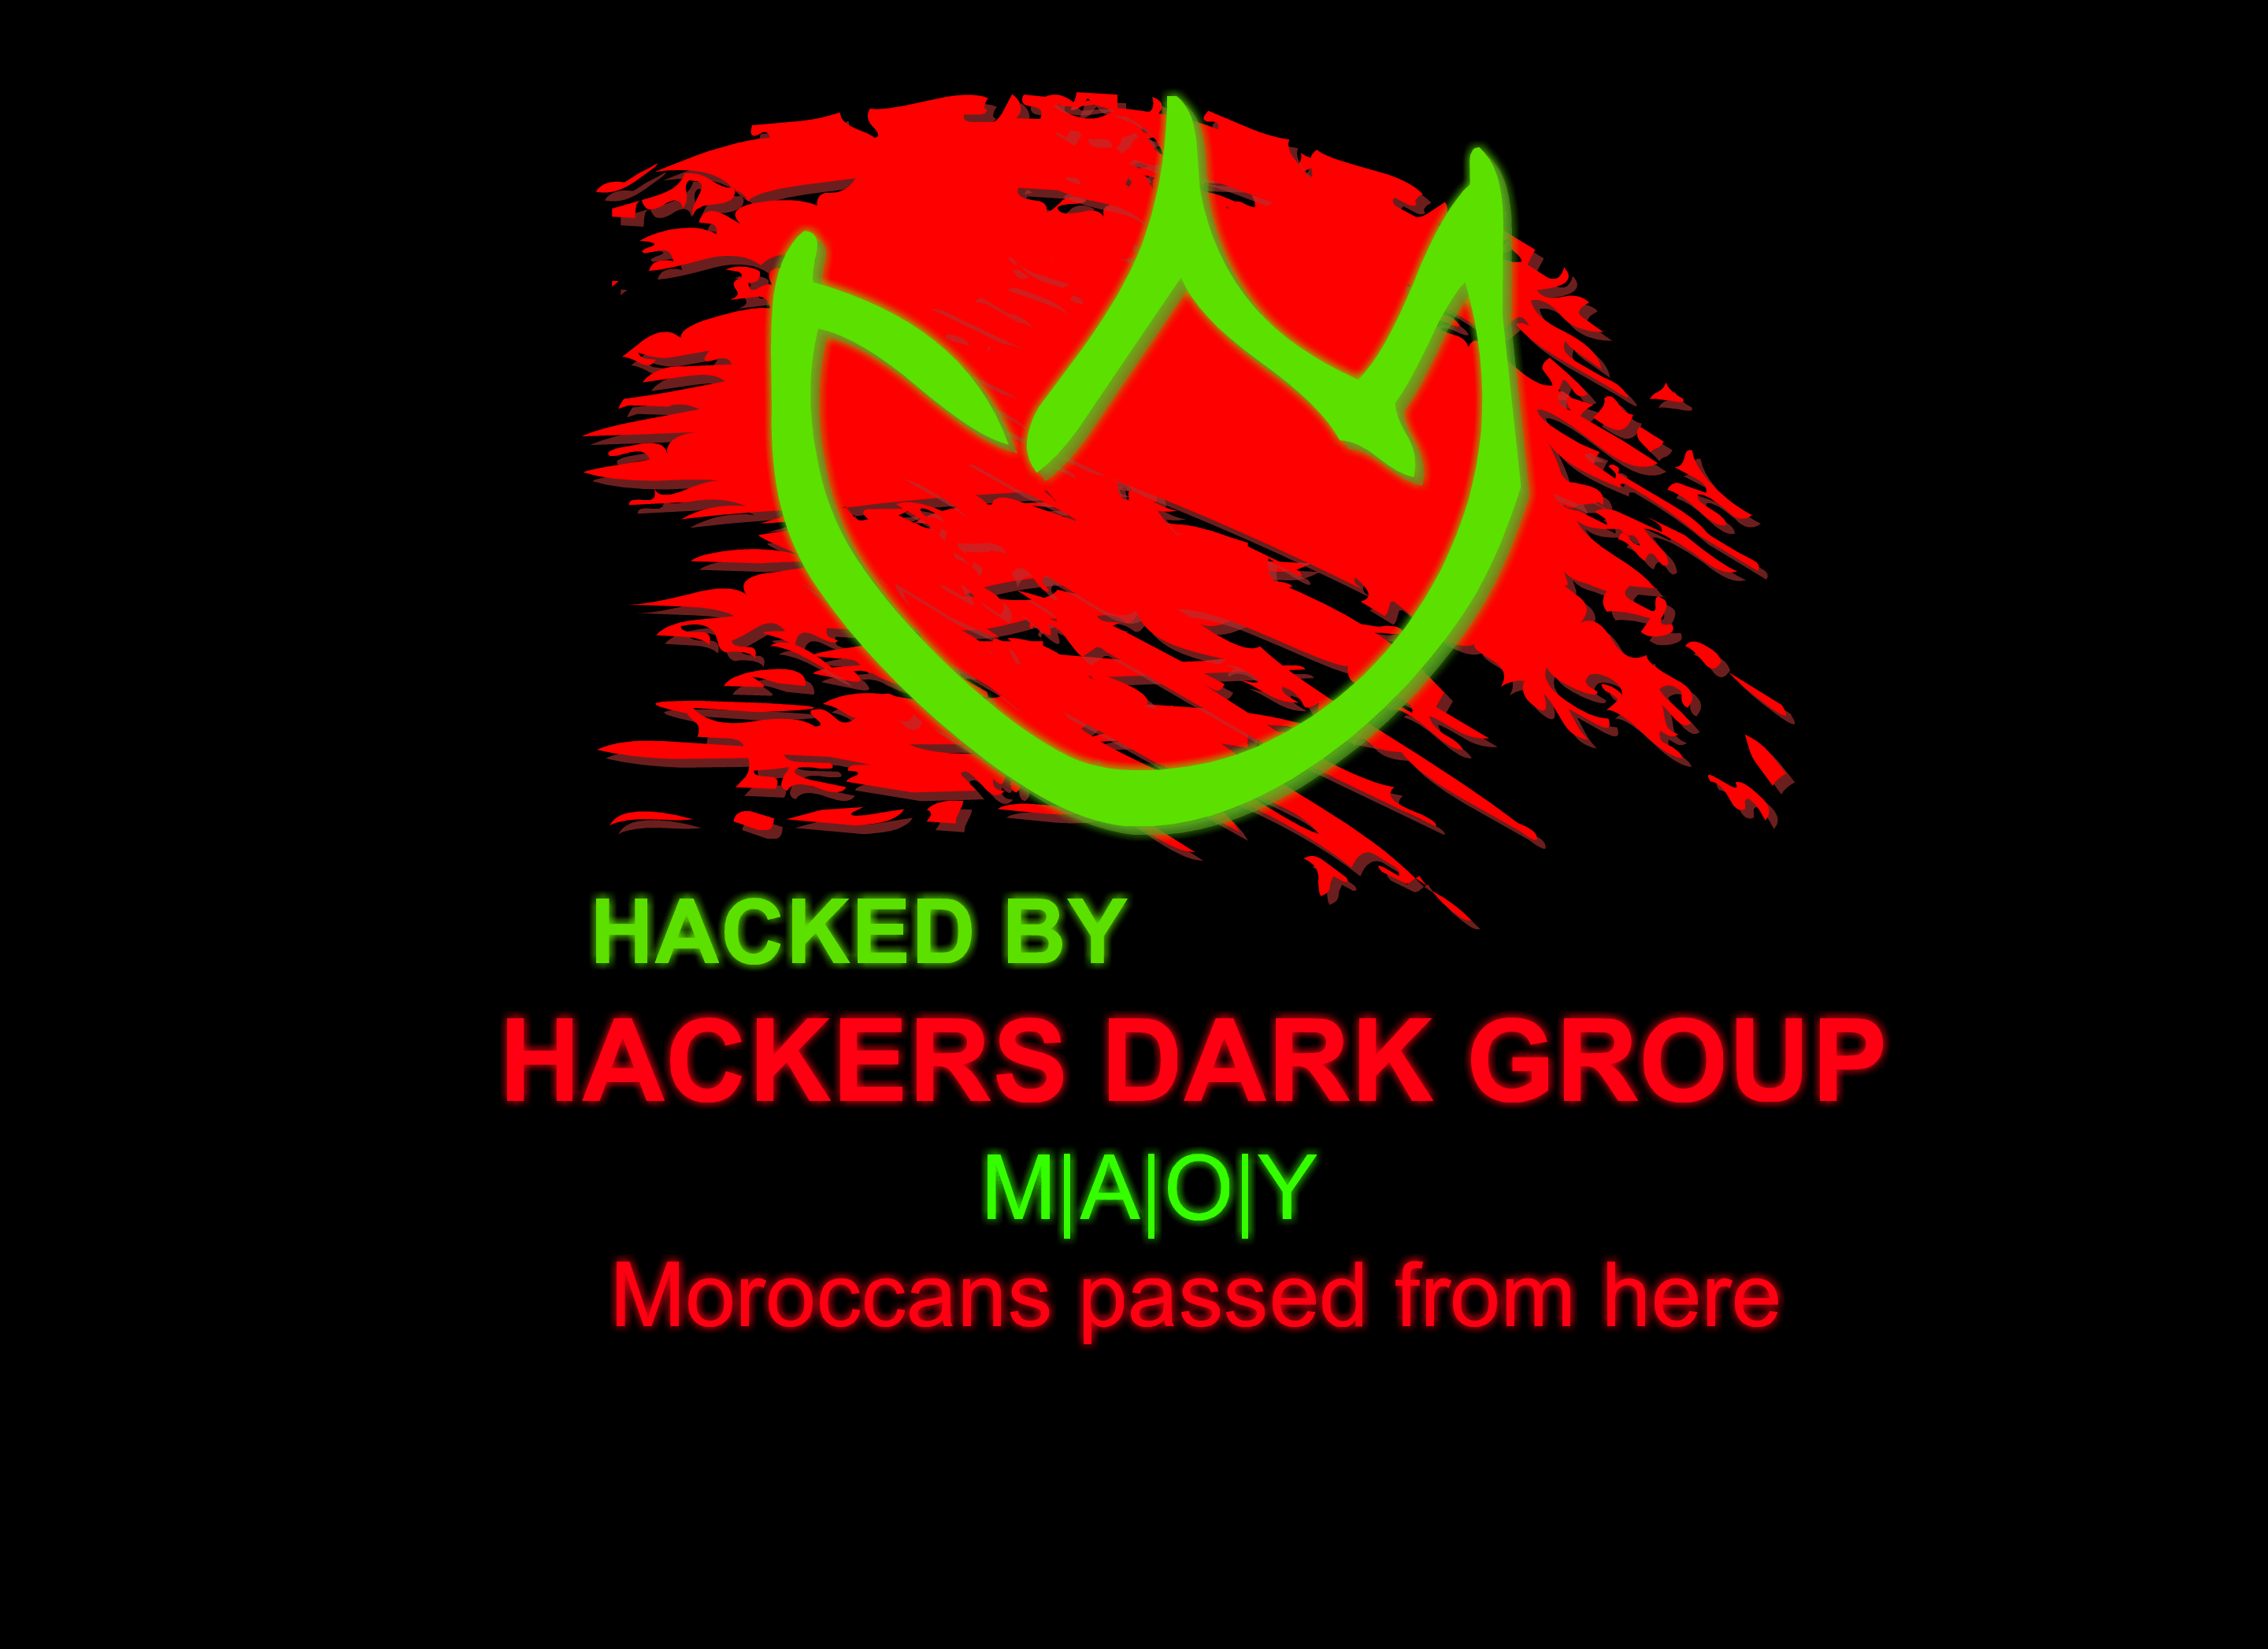 Moroccan_Hackers-Team.gif - 262.97 Ko